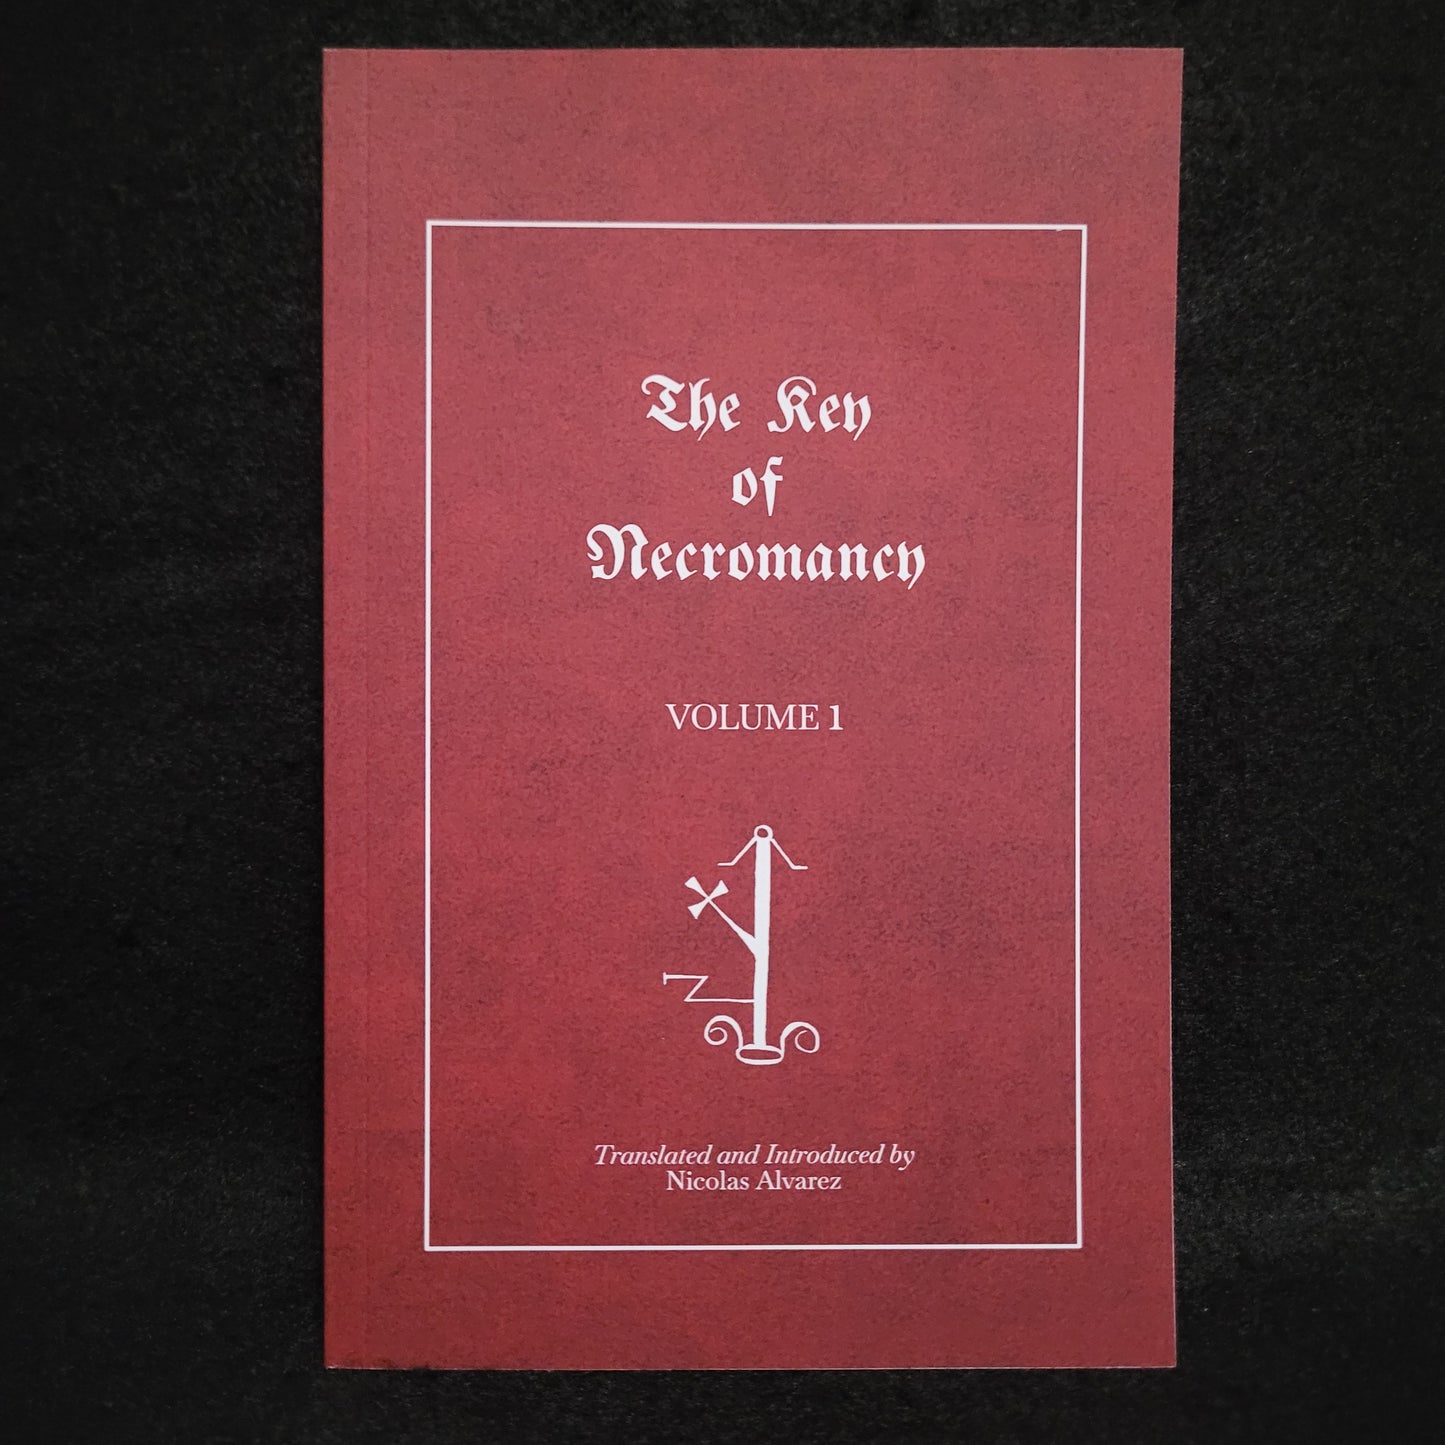 The Key of Necromancy, Vol. I Translated & Edited by Nicolás Álvarez Ortiz (Enodia Press, 2019) Paperback Edition